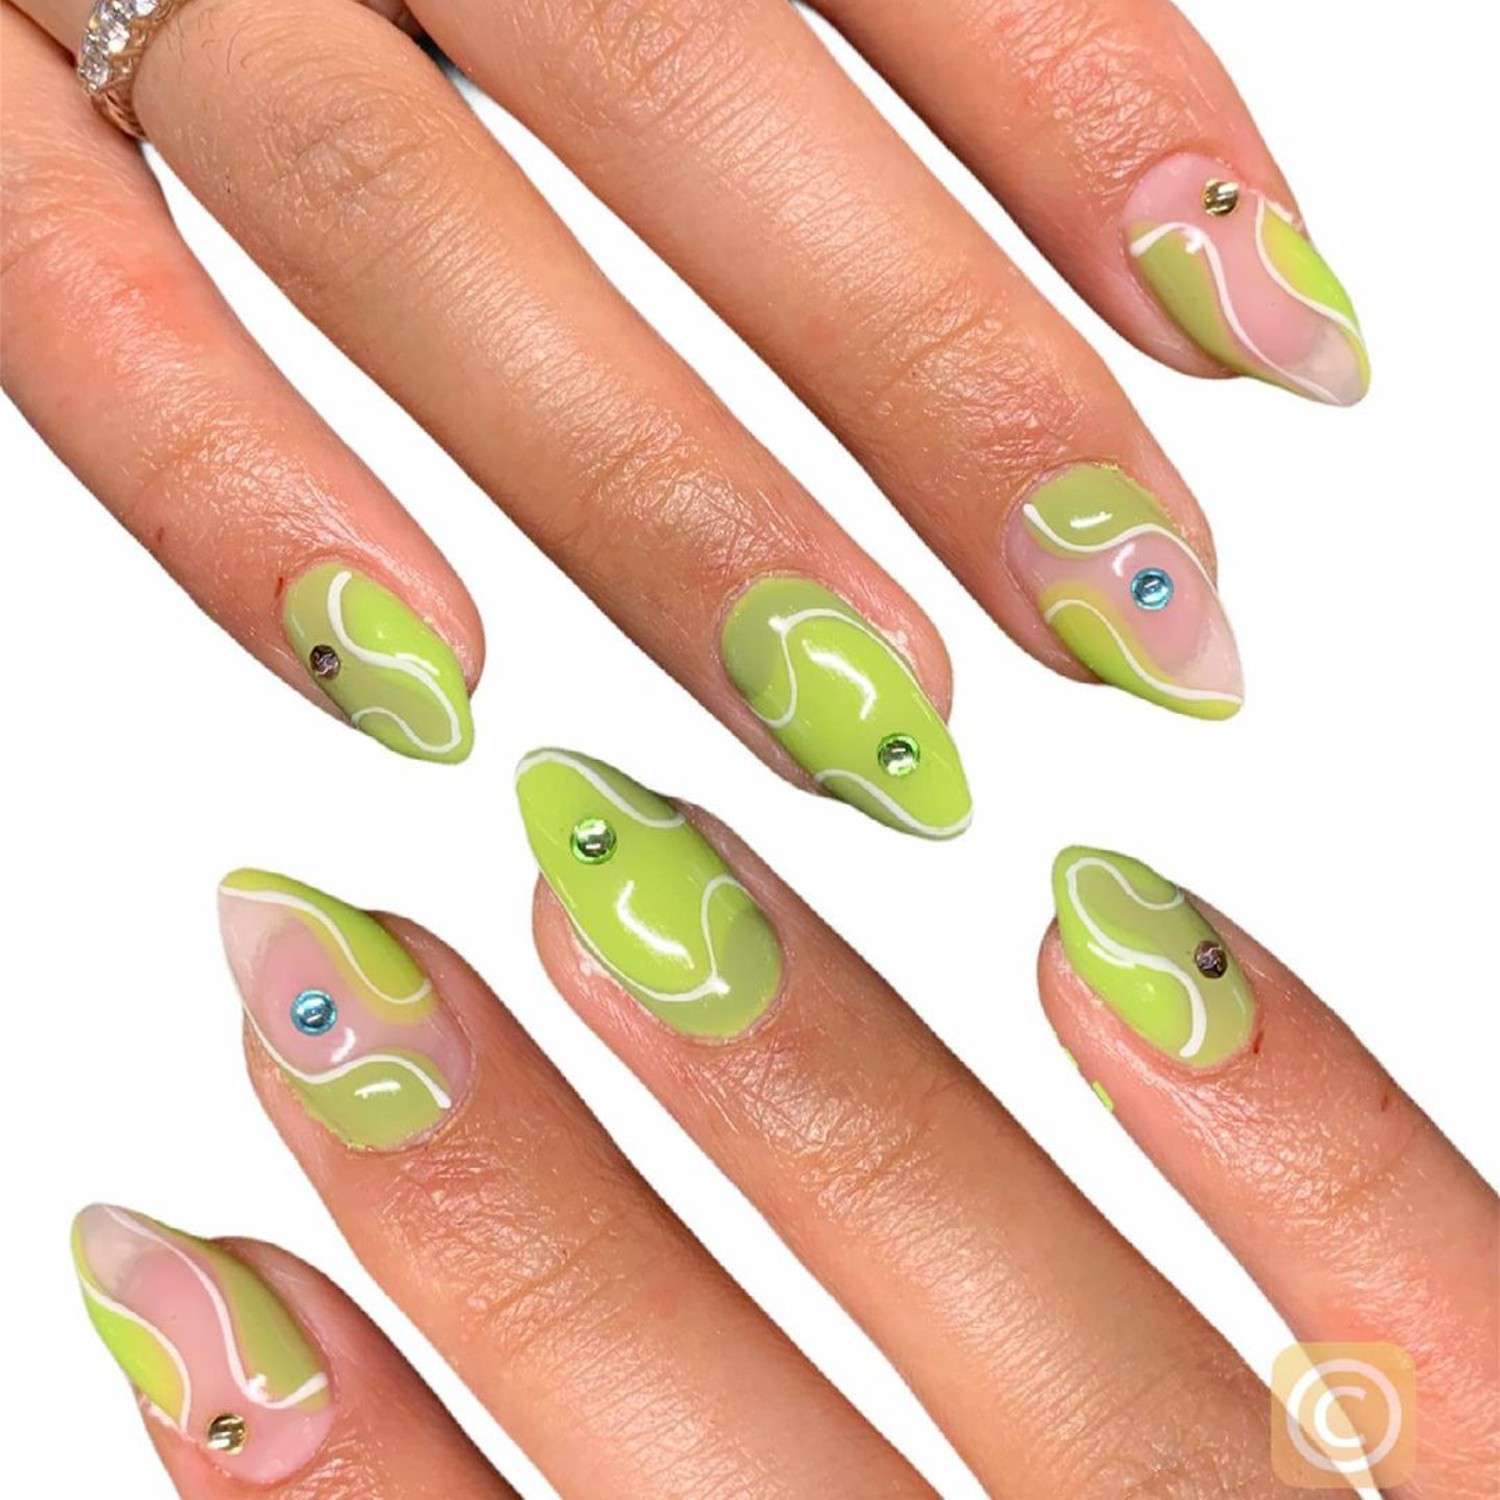 Pistachio Gemstone Nails